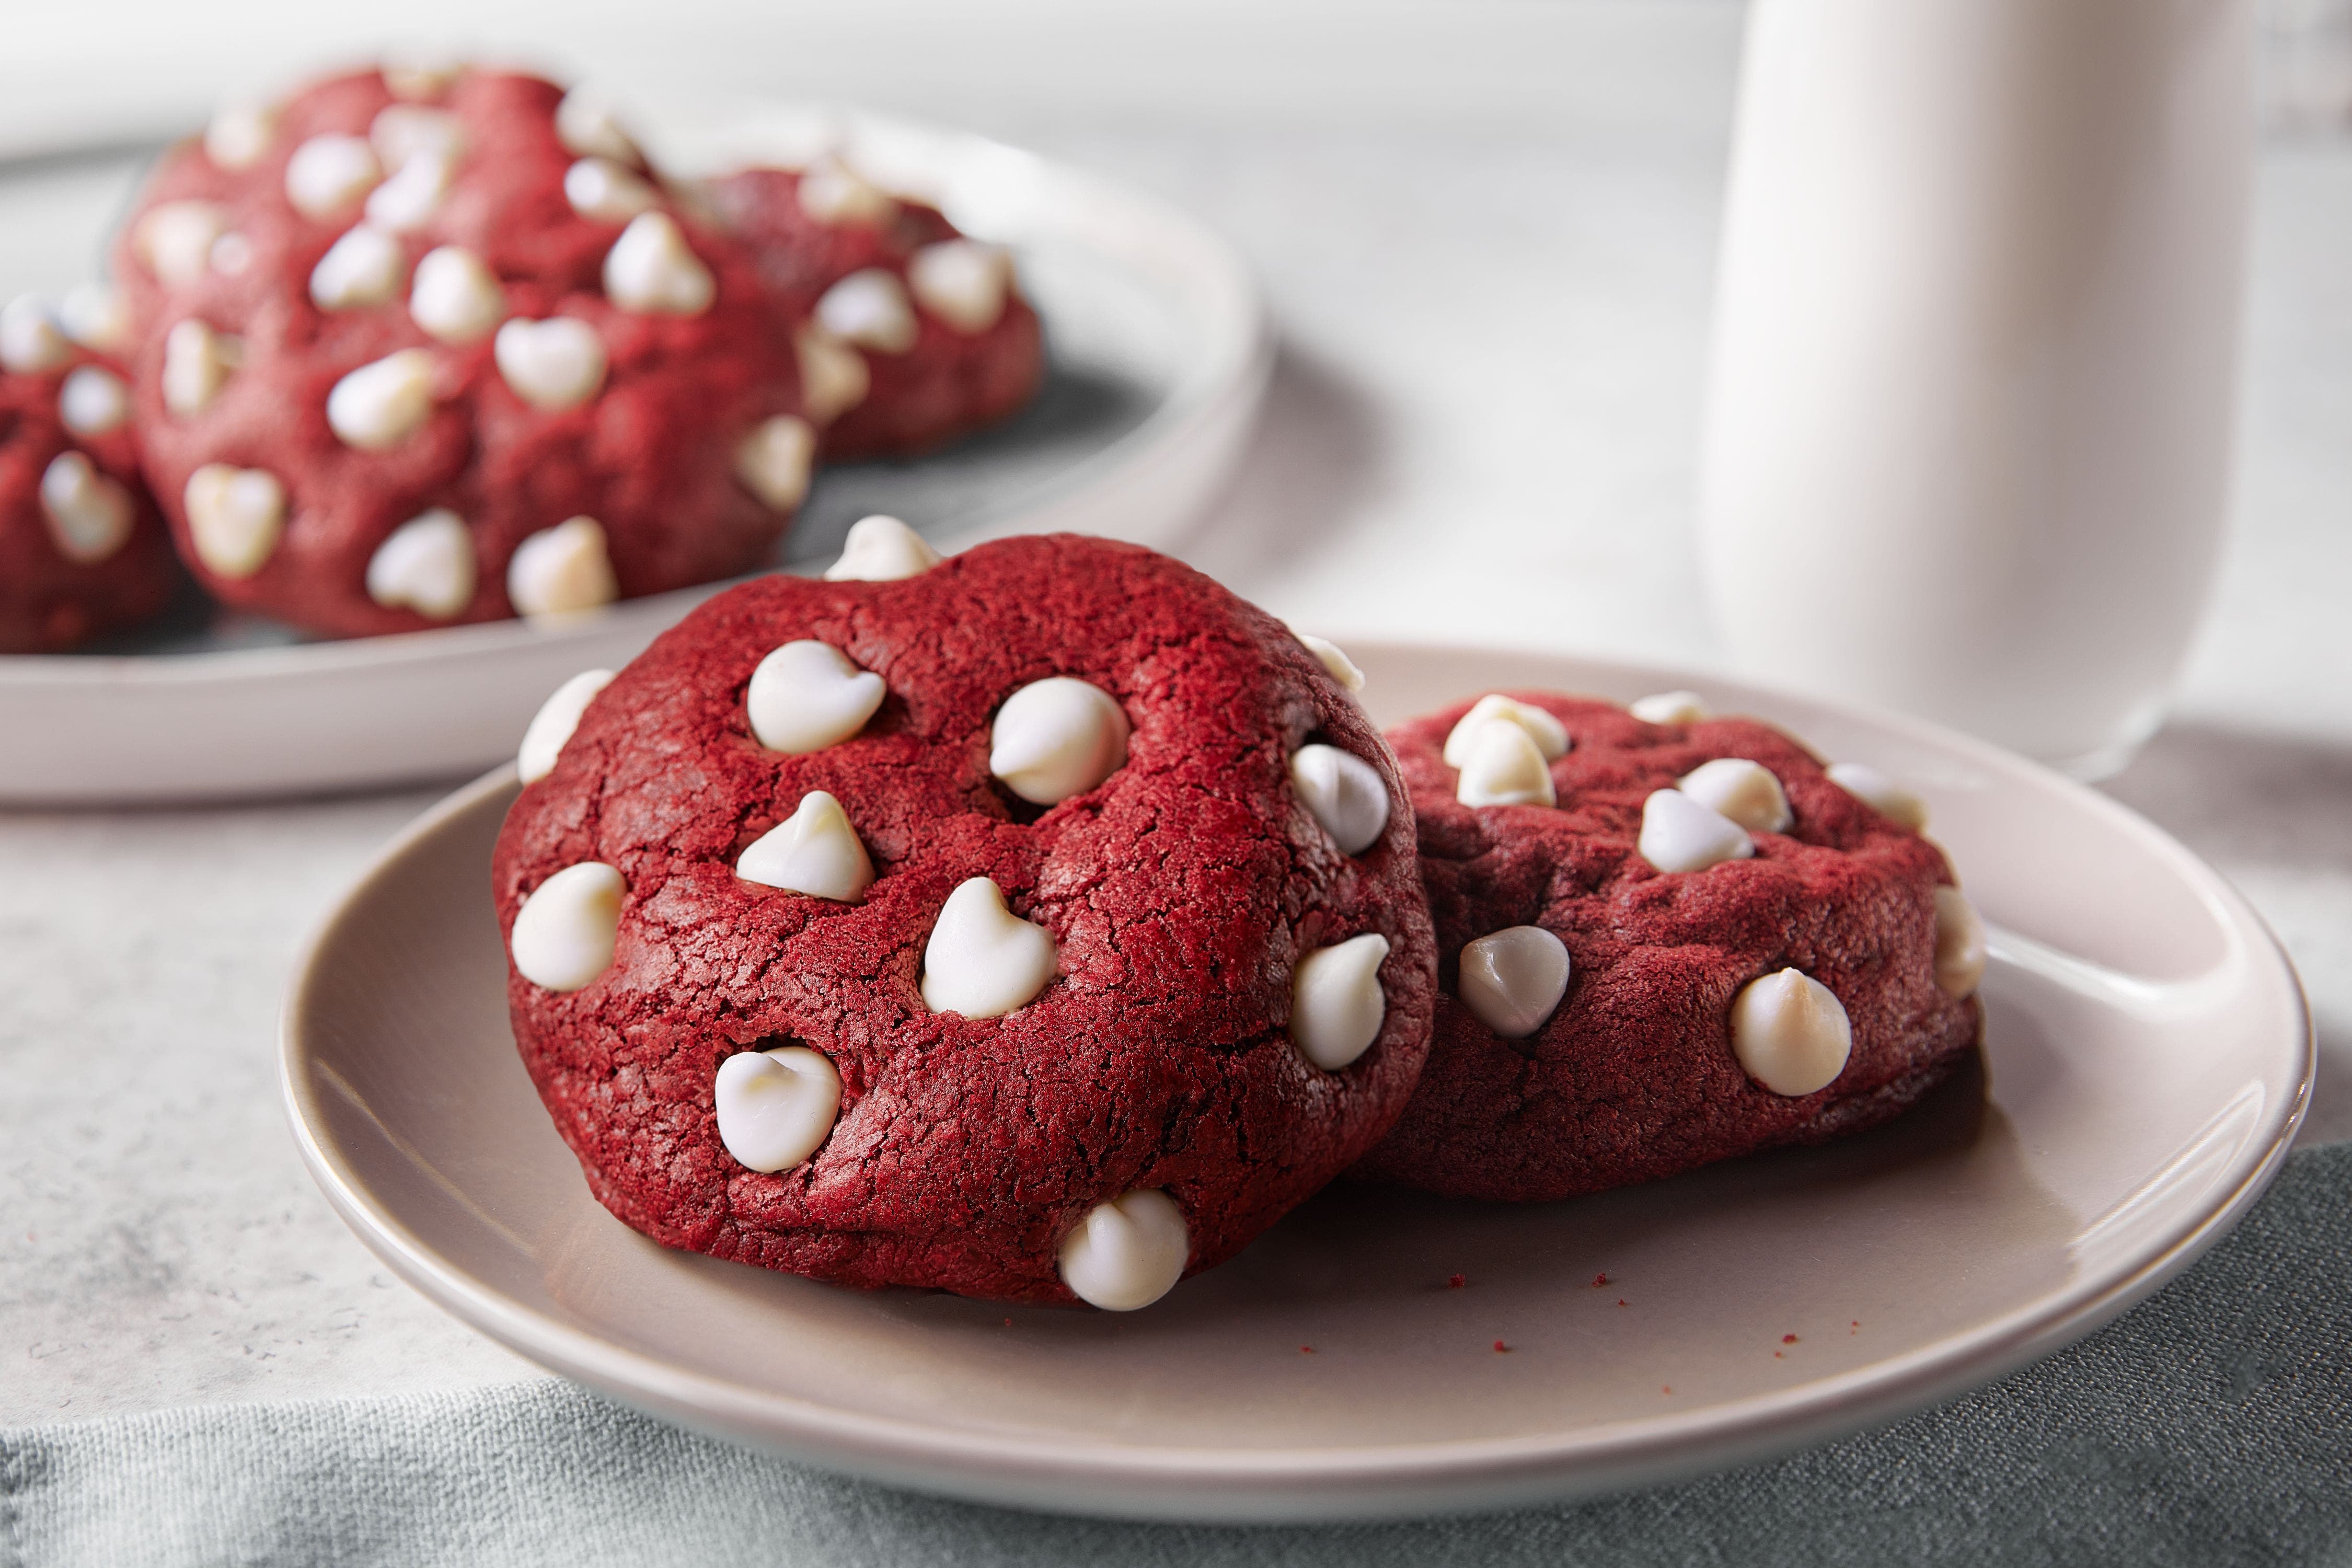 https://www.hersheyland.com/content/dam/hersheyland/en-us/recipes/recipe-images/807-hersheys-cream-cheese-chip-red-velvet-cookies.jpeg